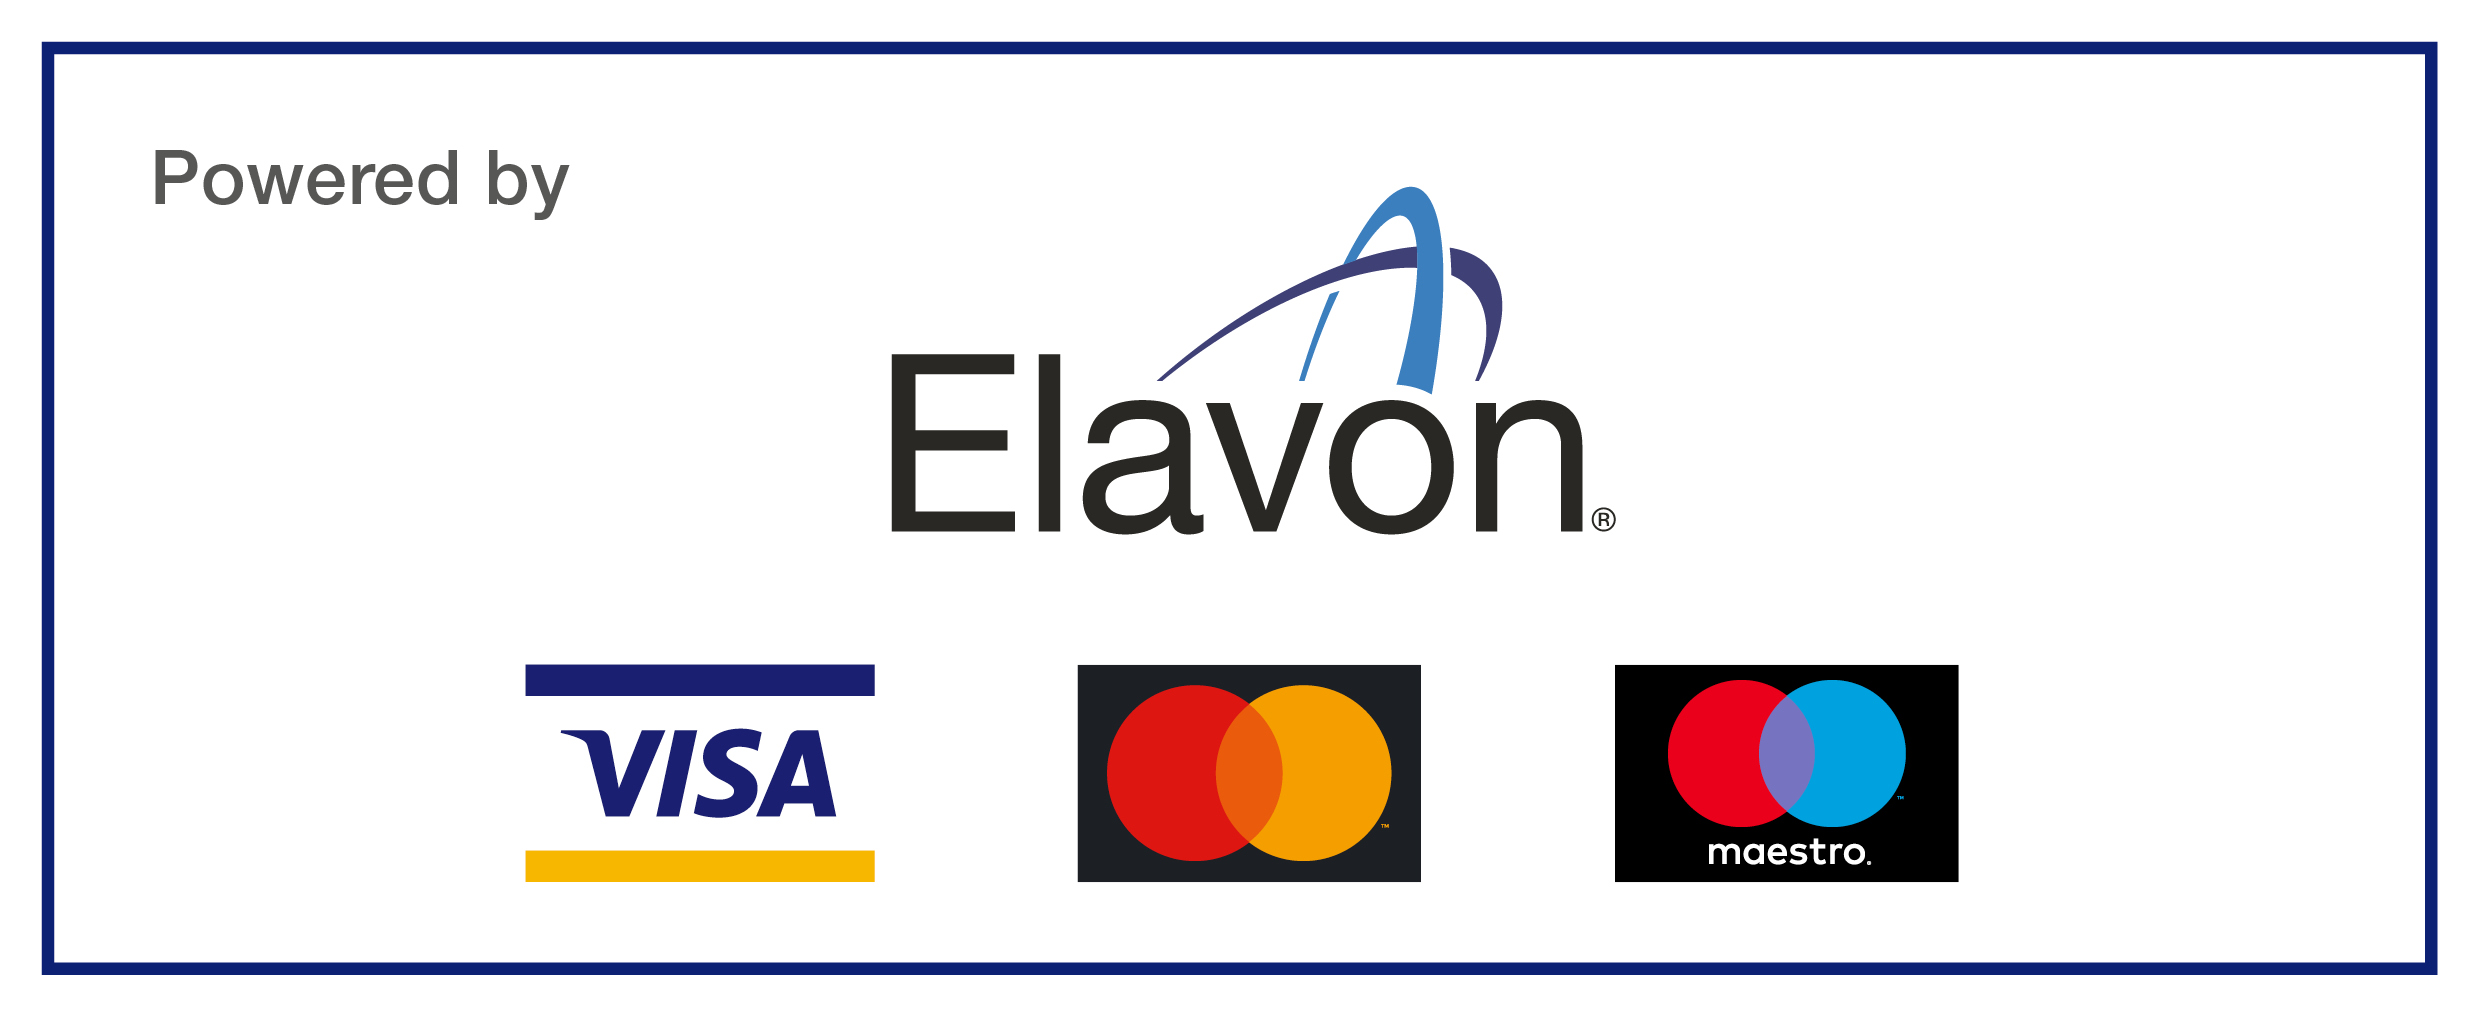 Card scheme logo: Visa, Mastercard, Maestro